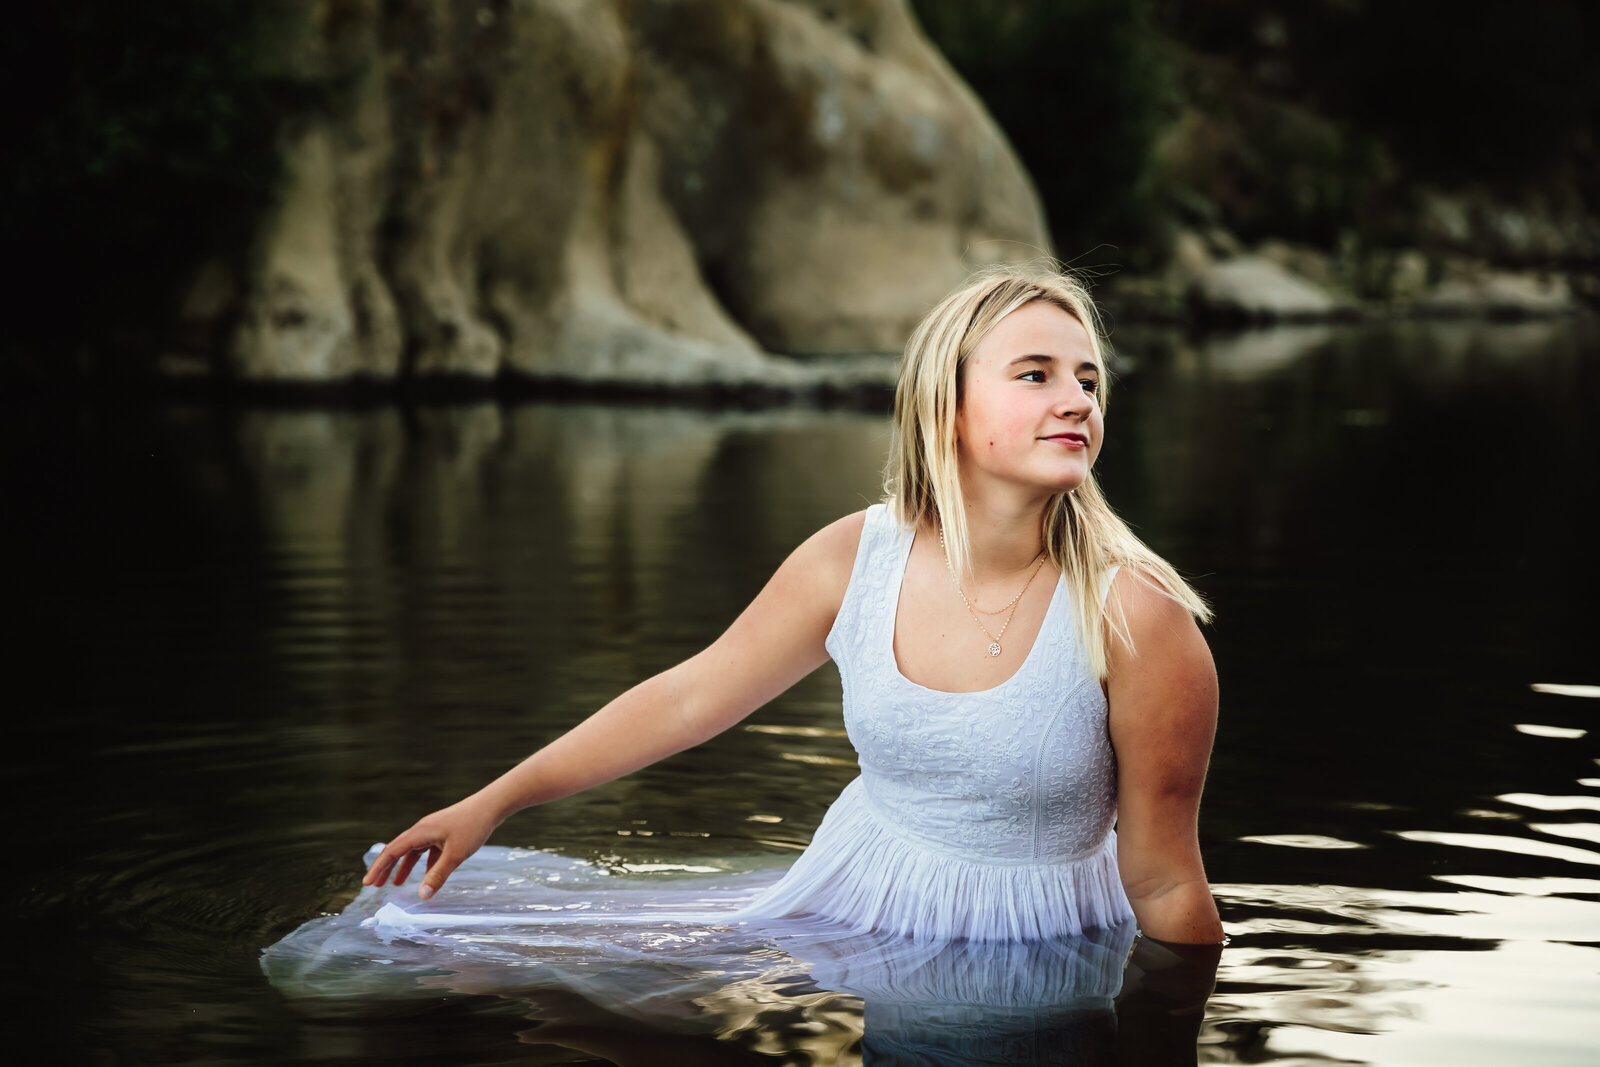 untitled-210523-354-Edit-3senior-portrait-girl-white-dress-sitting-in-water-beautiful-dreamy